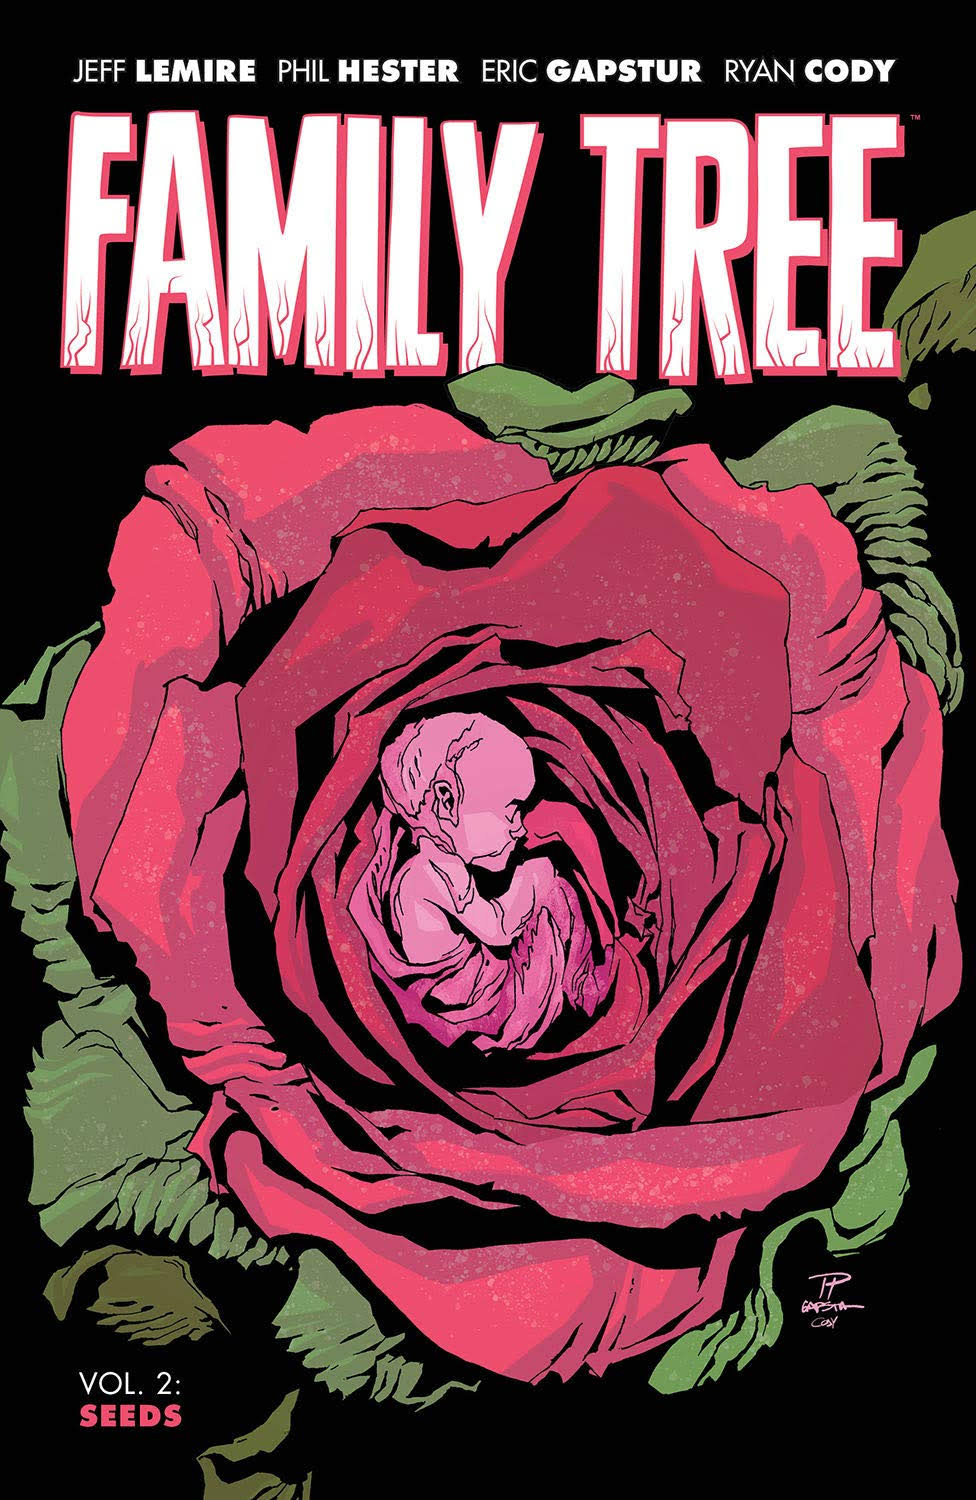 Family Tree, Volume 2 [Book]